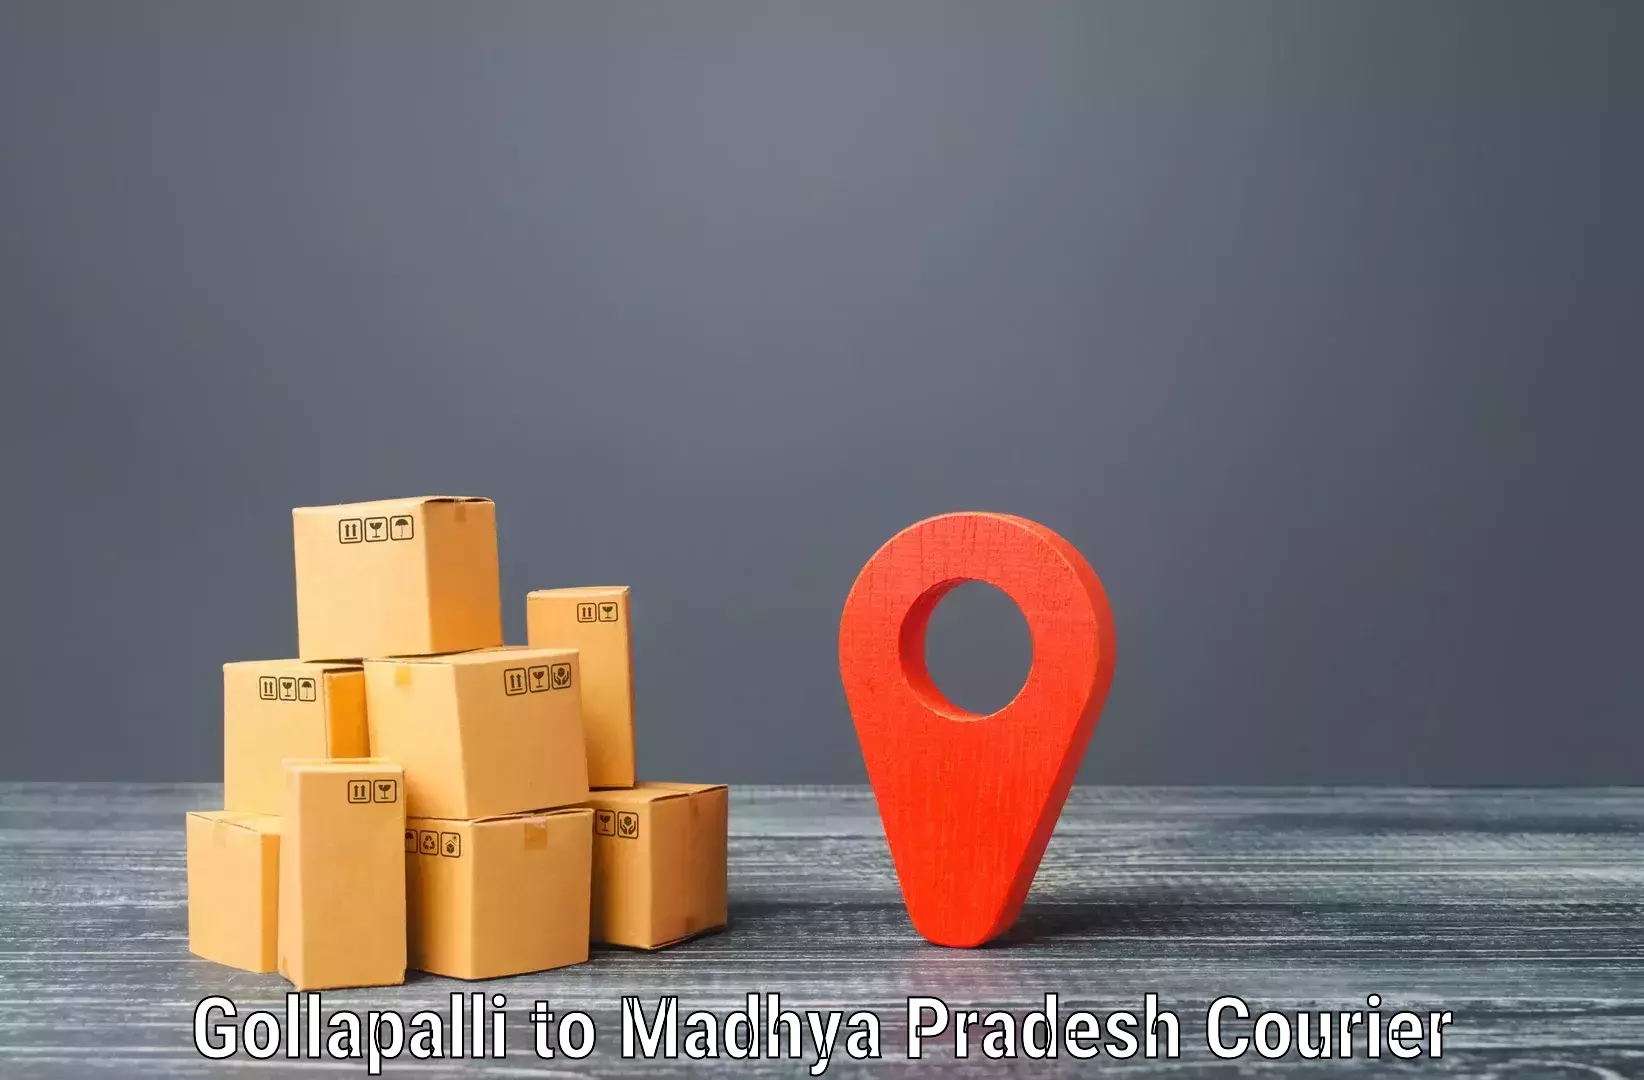 Courier service partnerships Gollapalli to Tikamgarh